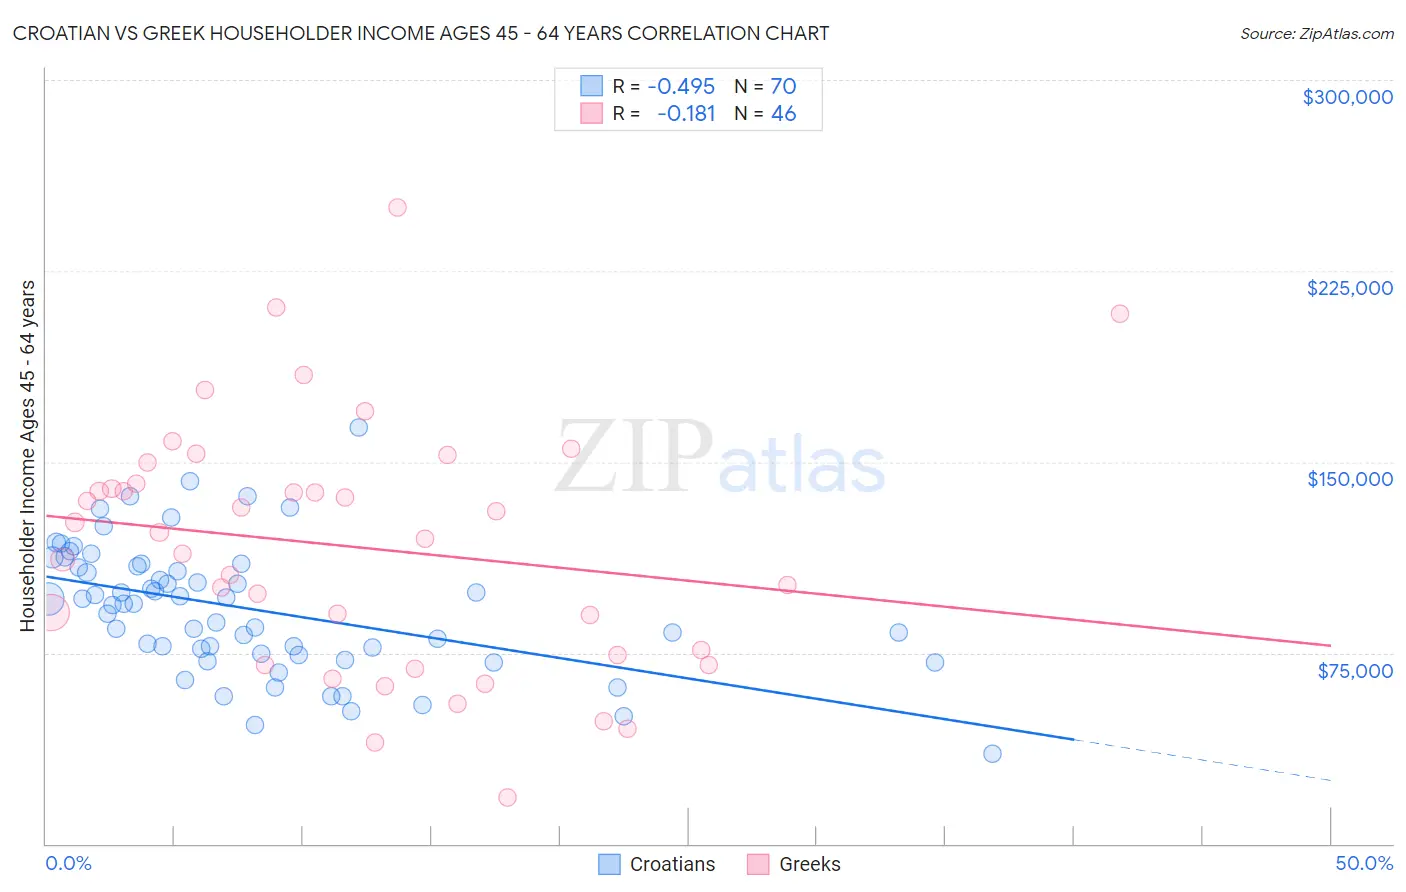 Croatian vs Greek Householder Income Ages 45 - 64 years